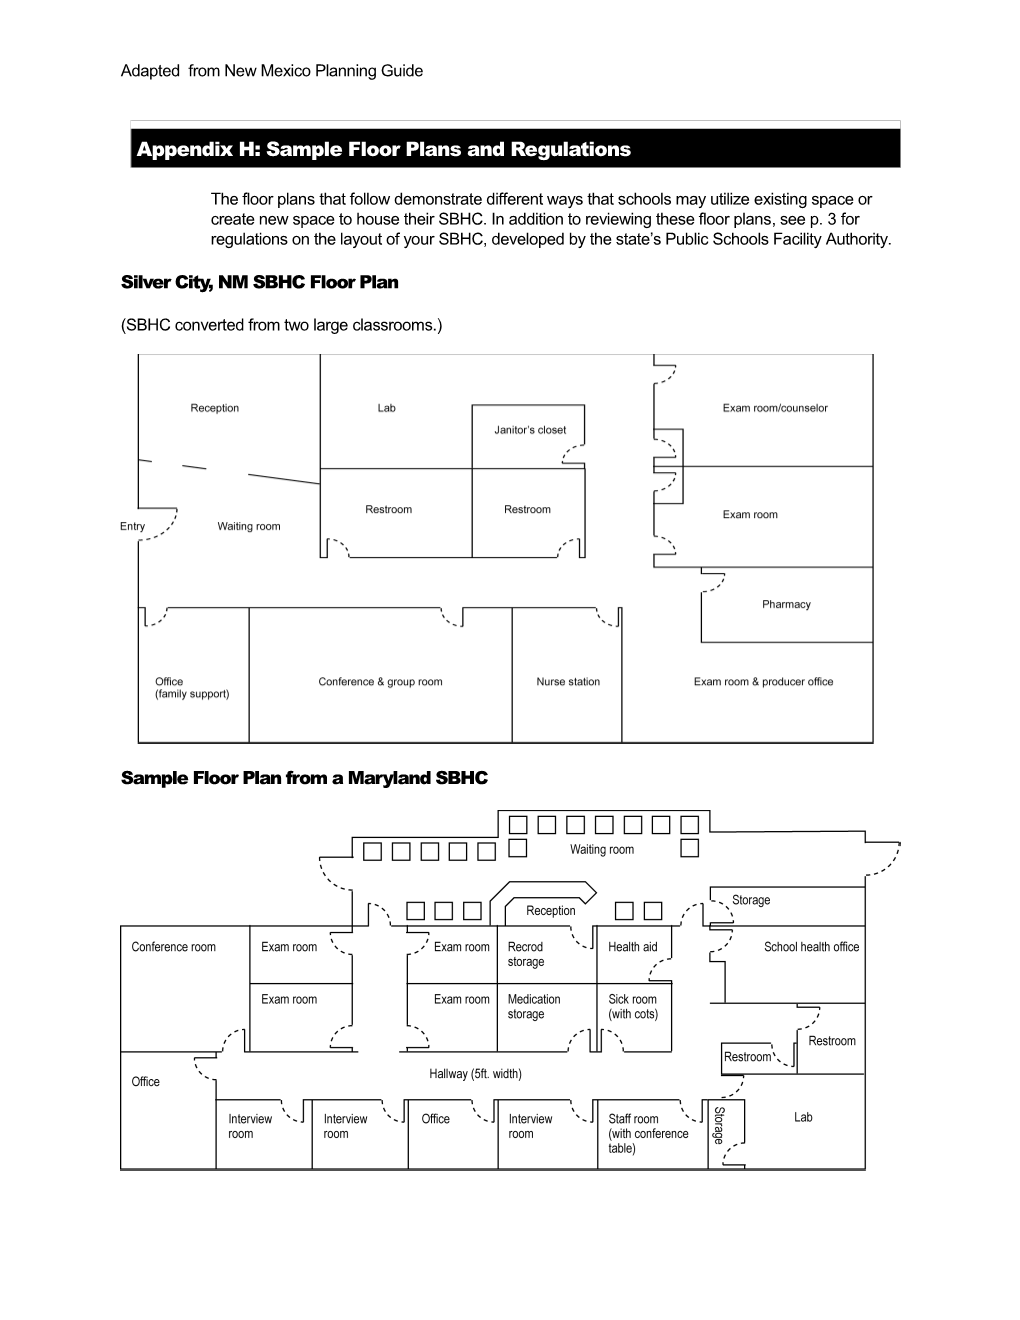 Appendix H: Sample Floor Plans and Regulations